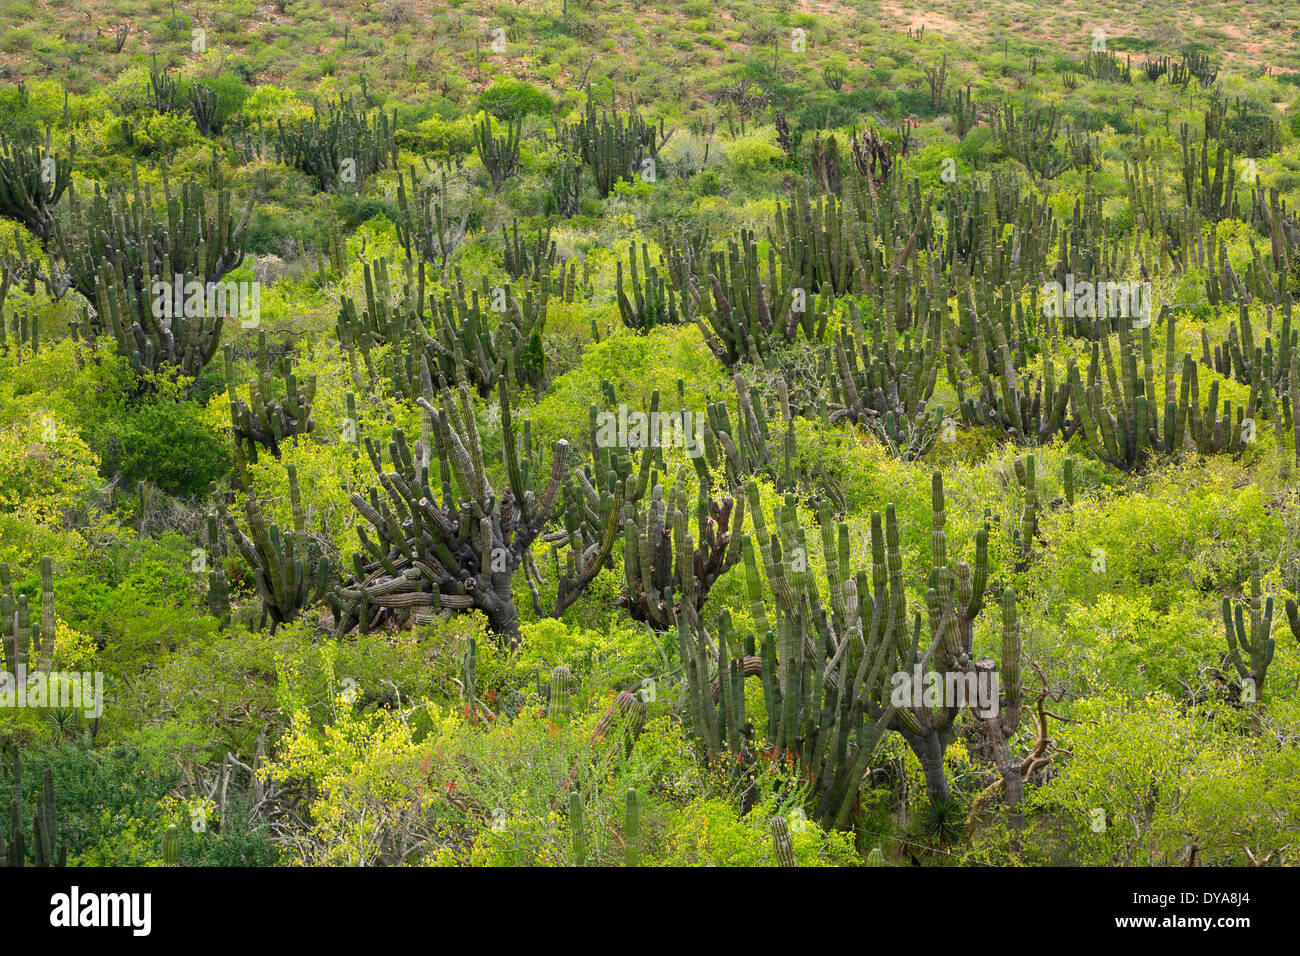 Cardon Cactus, Pachycereus pringlei, Baja, Mexico, Central America, desert, cactus, succulent, dry Stock Photo